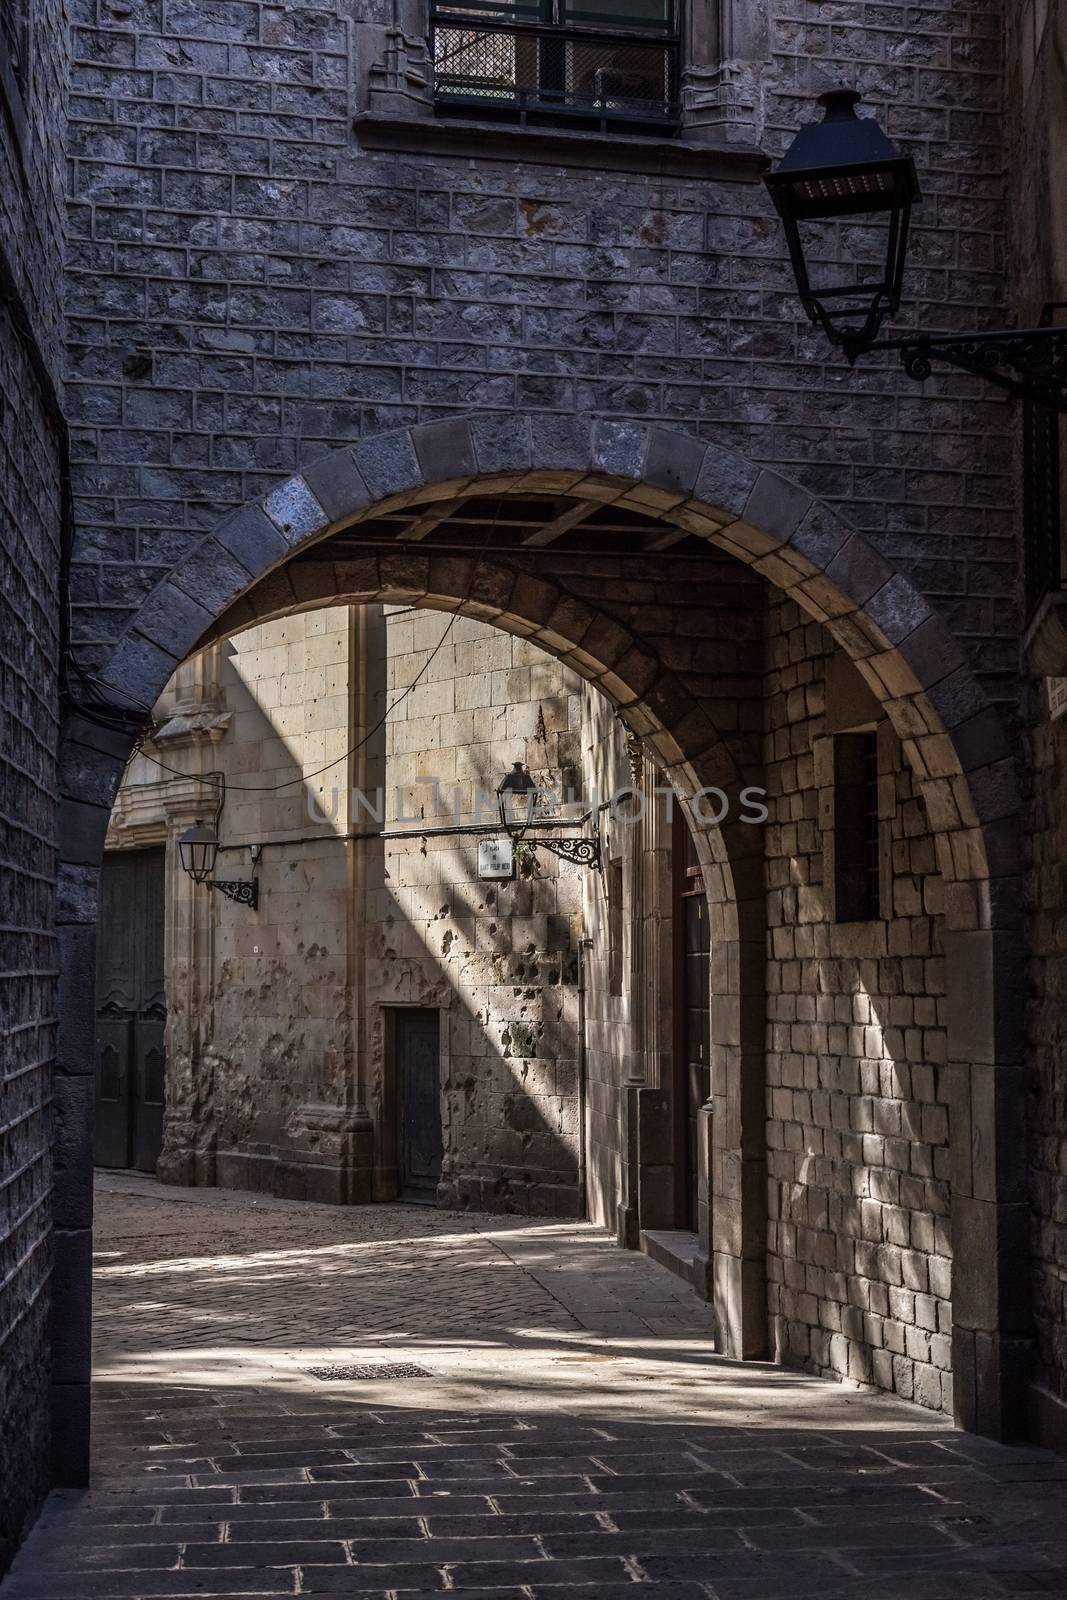 Entrance to place "Sant Felip Neri" in Barcelona of Spain by Digoarpi